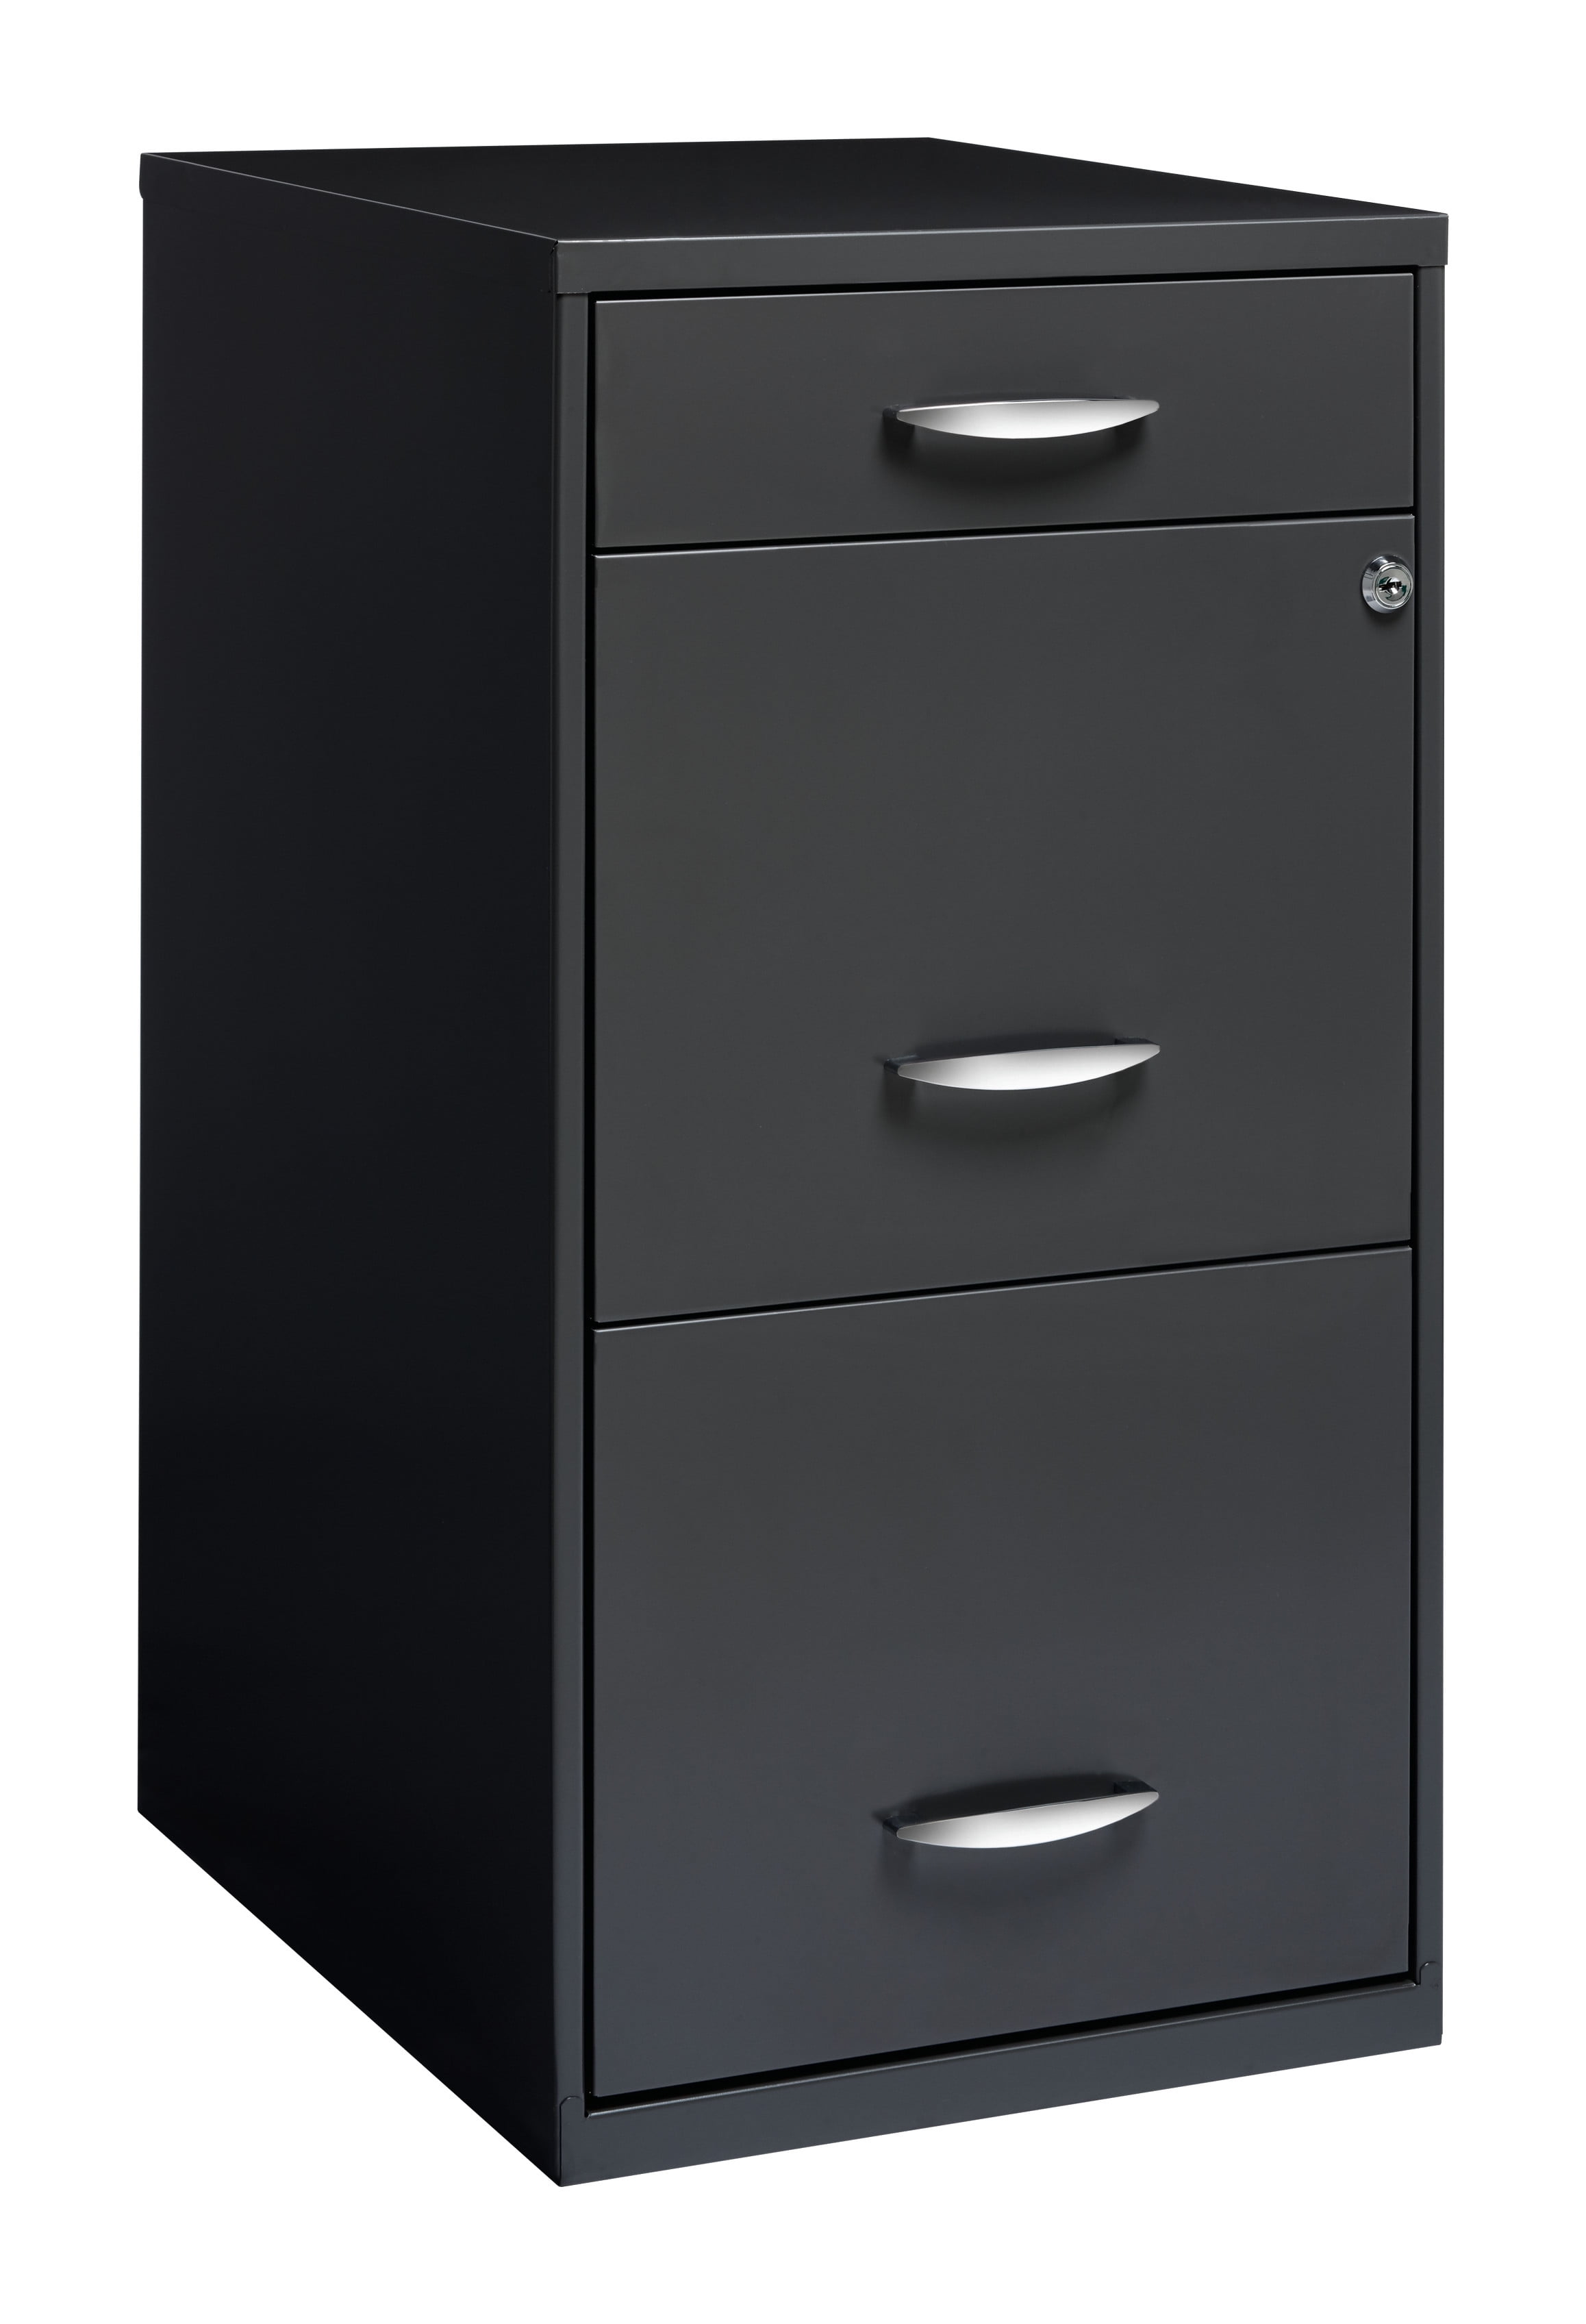 Space Solutions 21618 Vertical Metal File Cabinet Black for sale online 